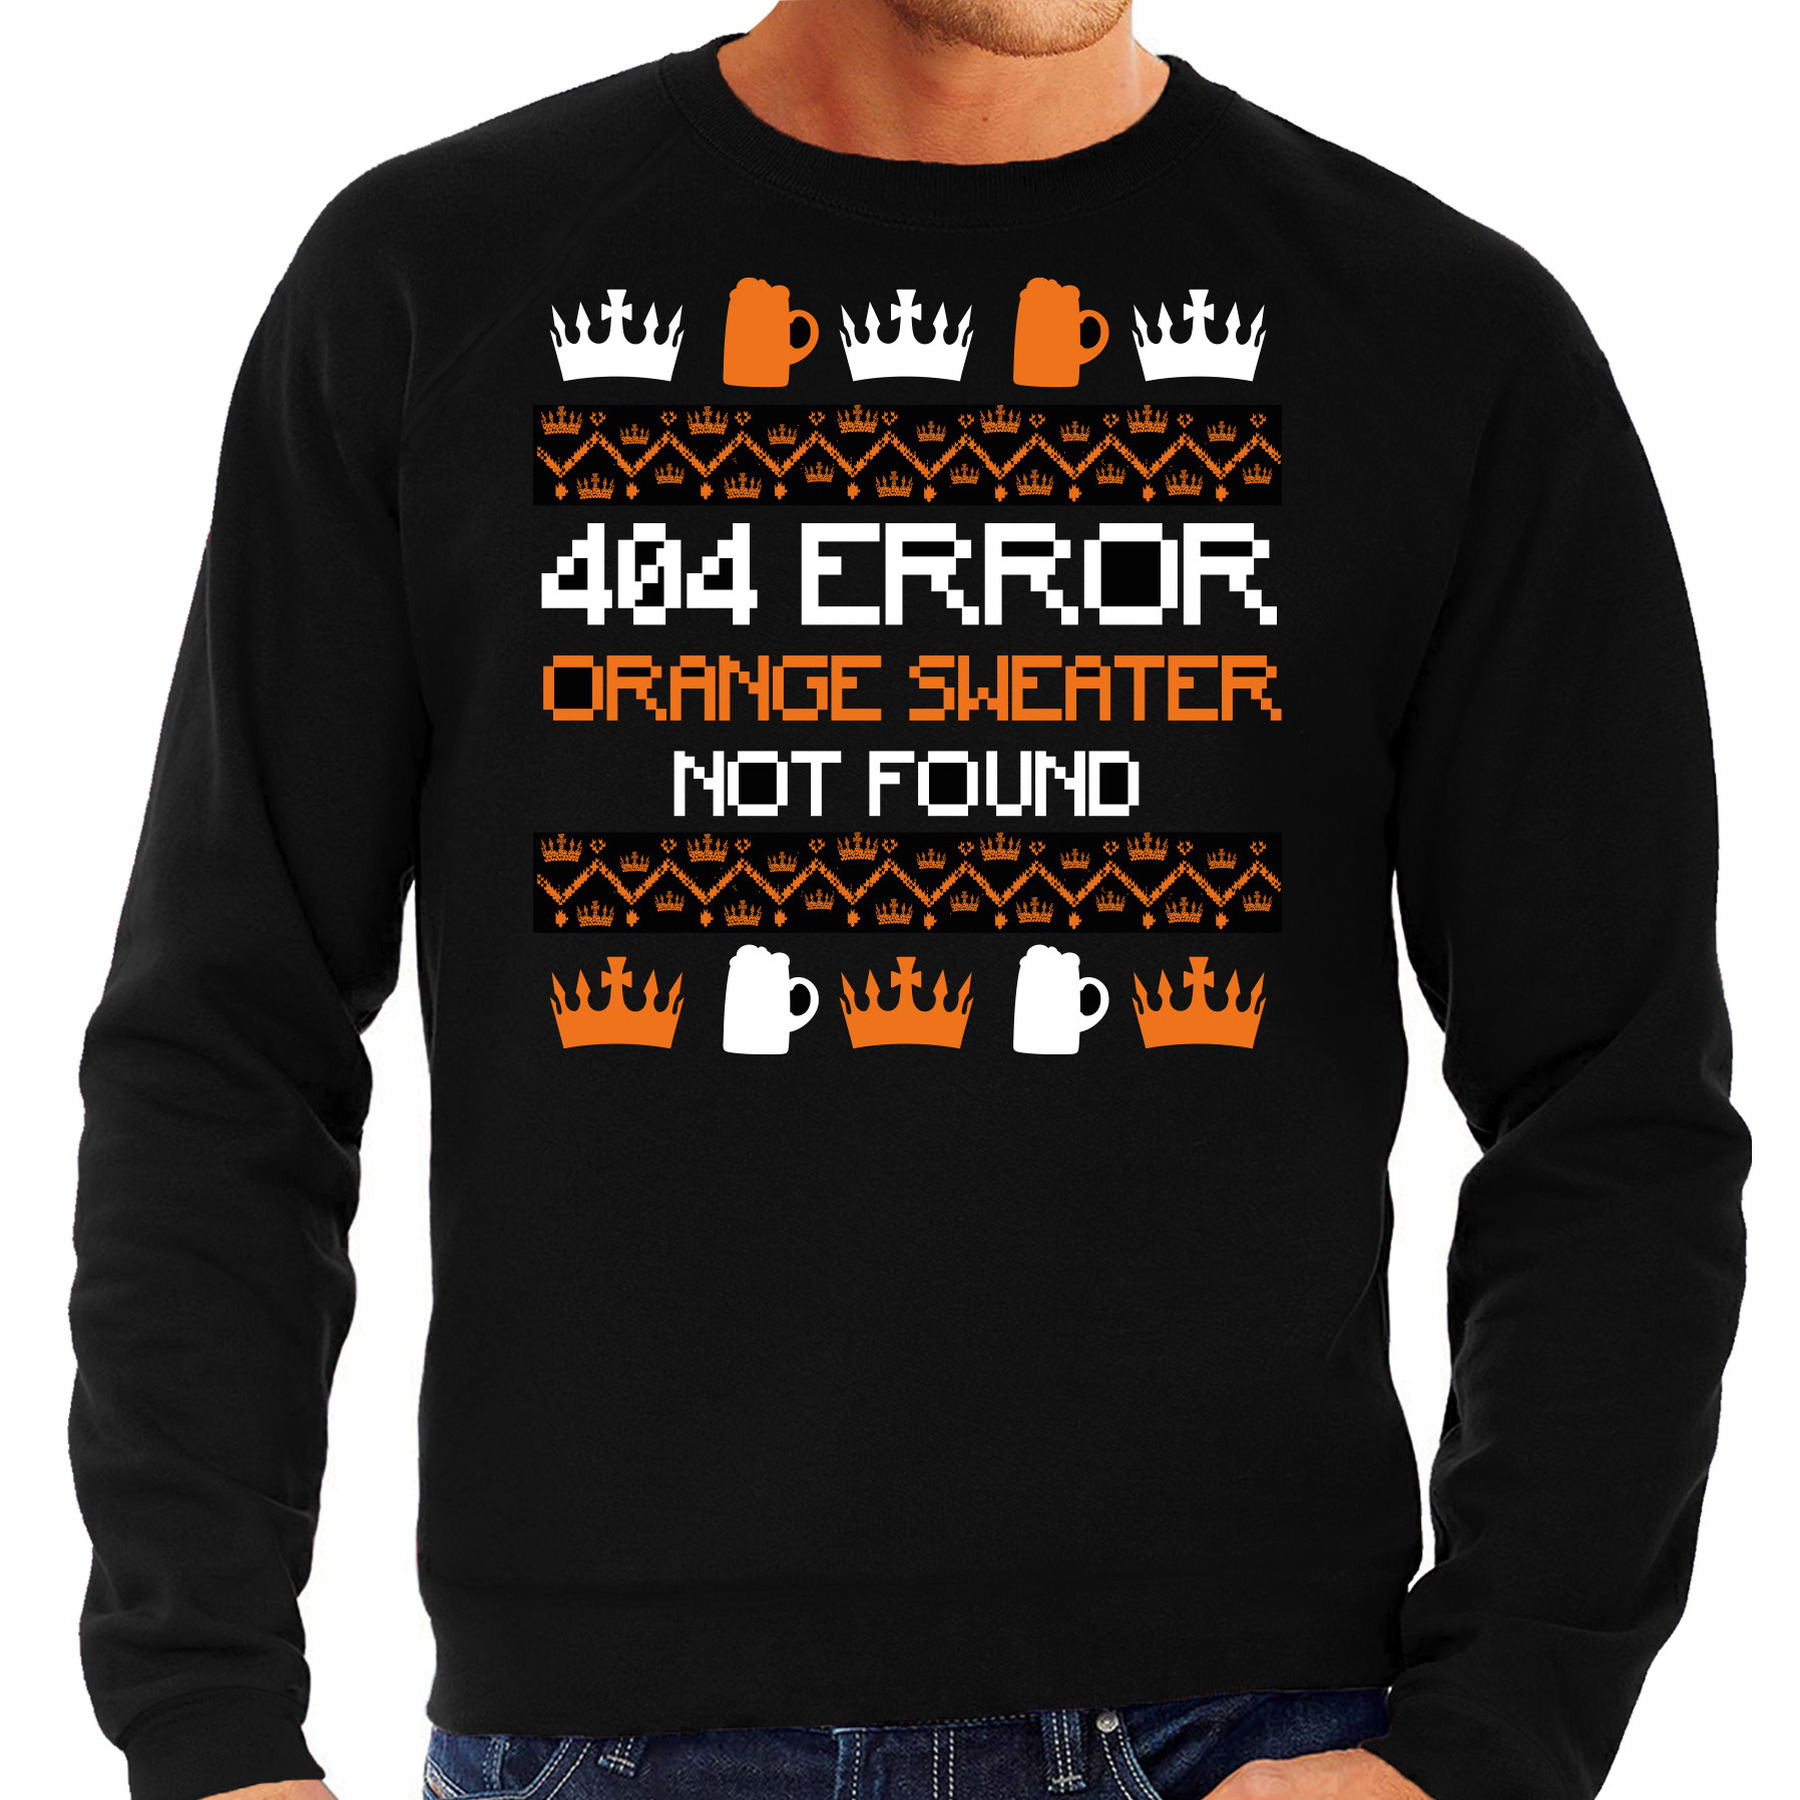 Koningsdag sweater voor heren 404 error not found zwart oranje feestkleding